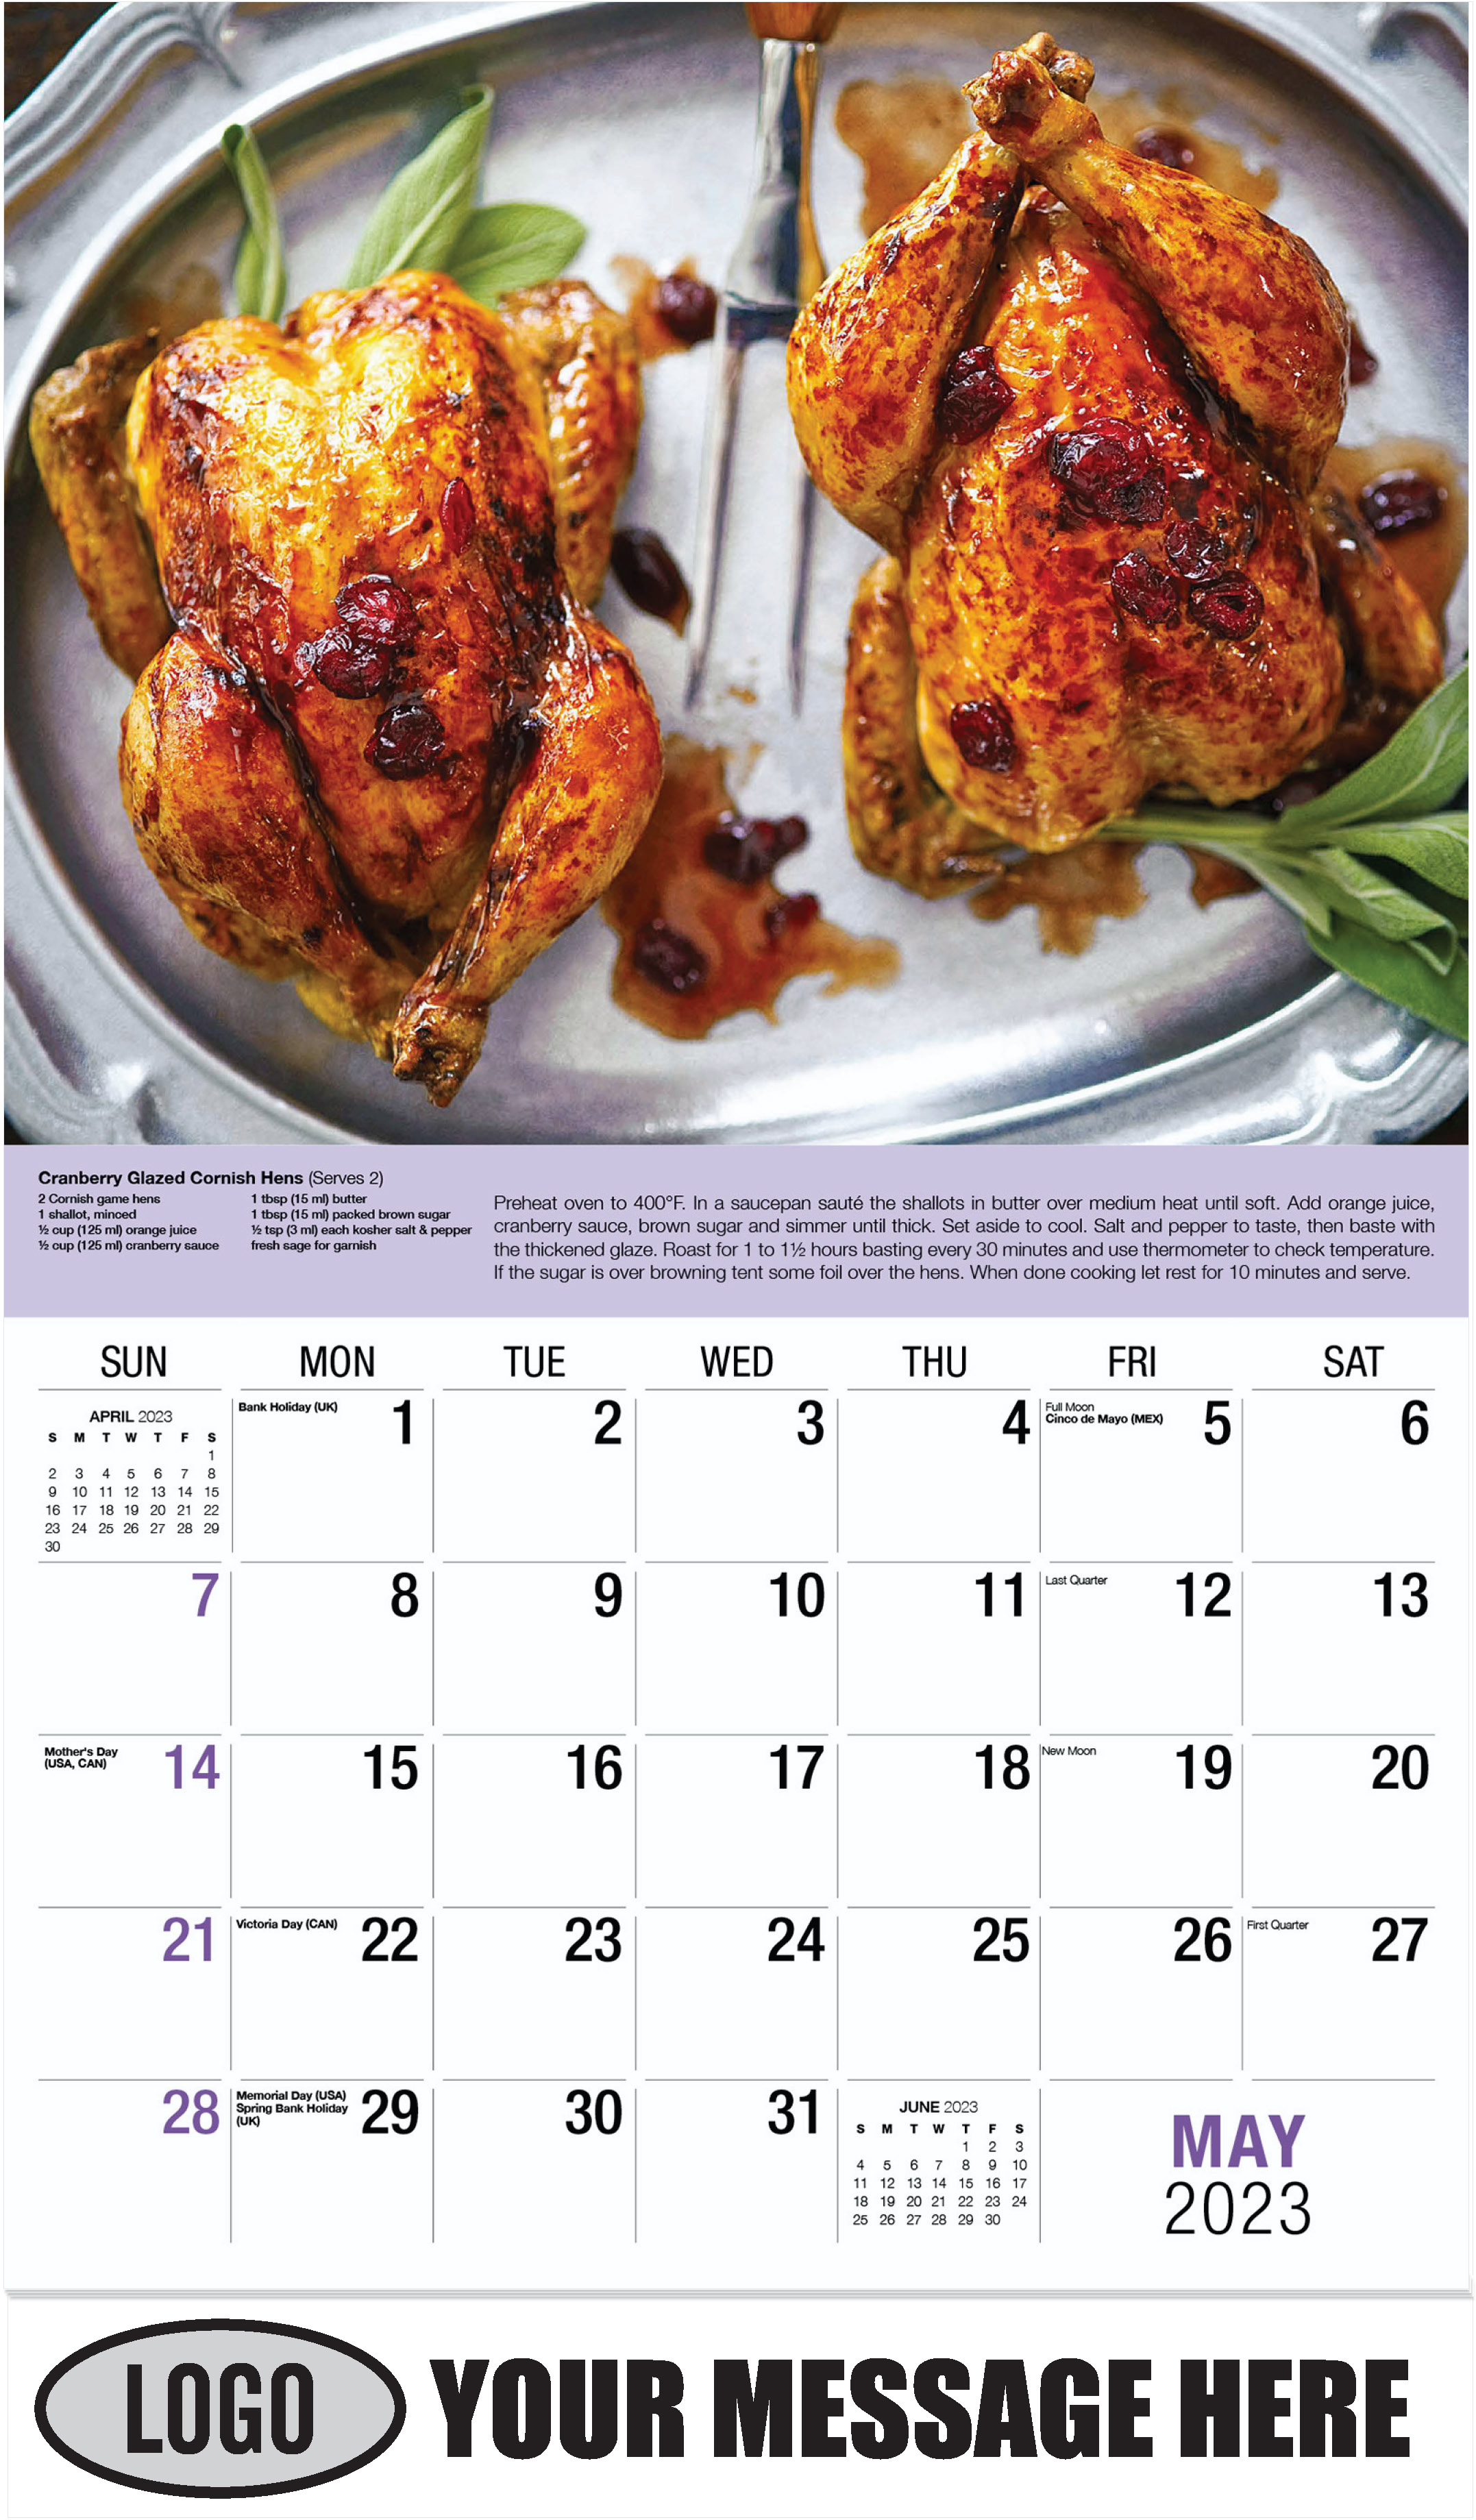 May - Recipes 2023 Promotional Calendar